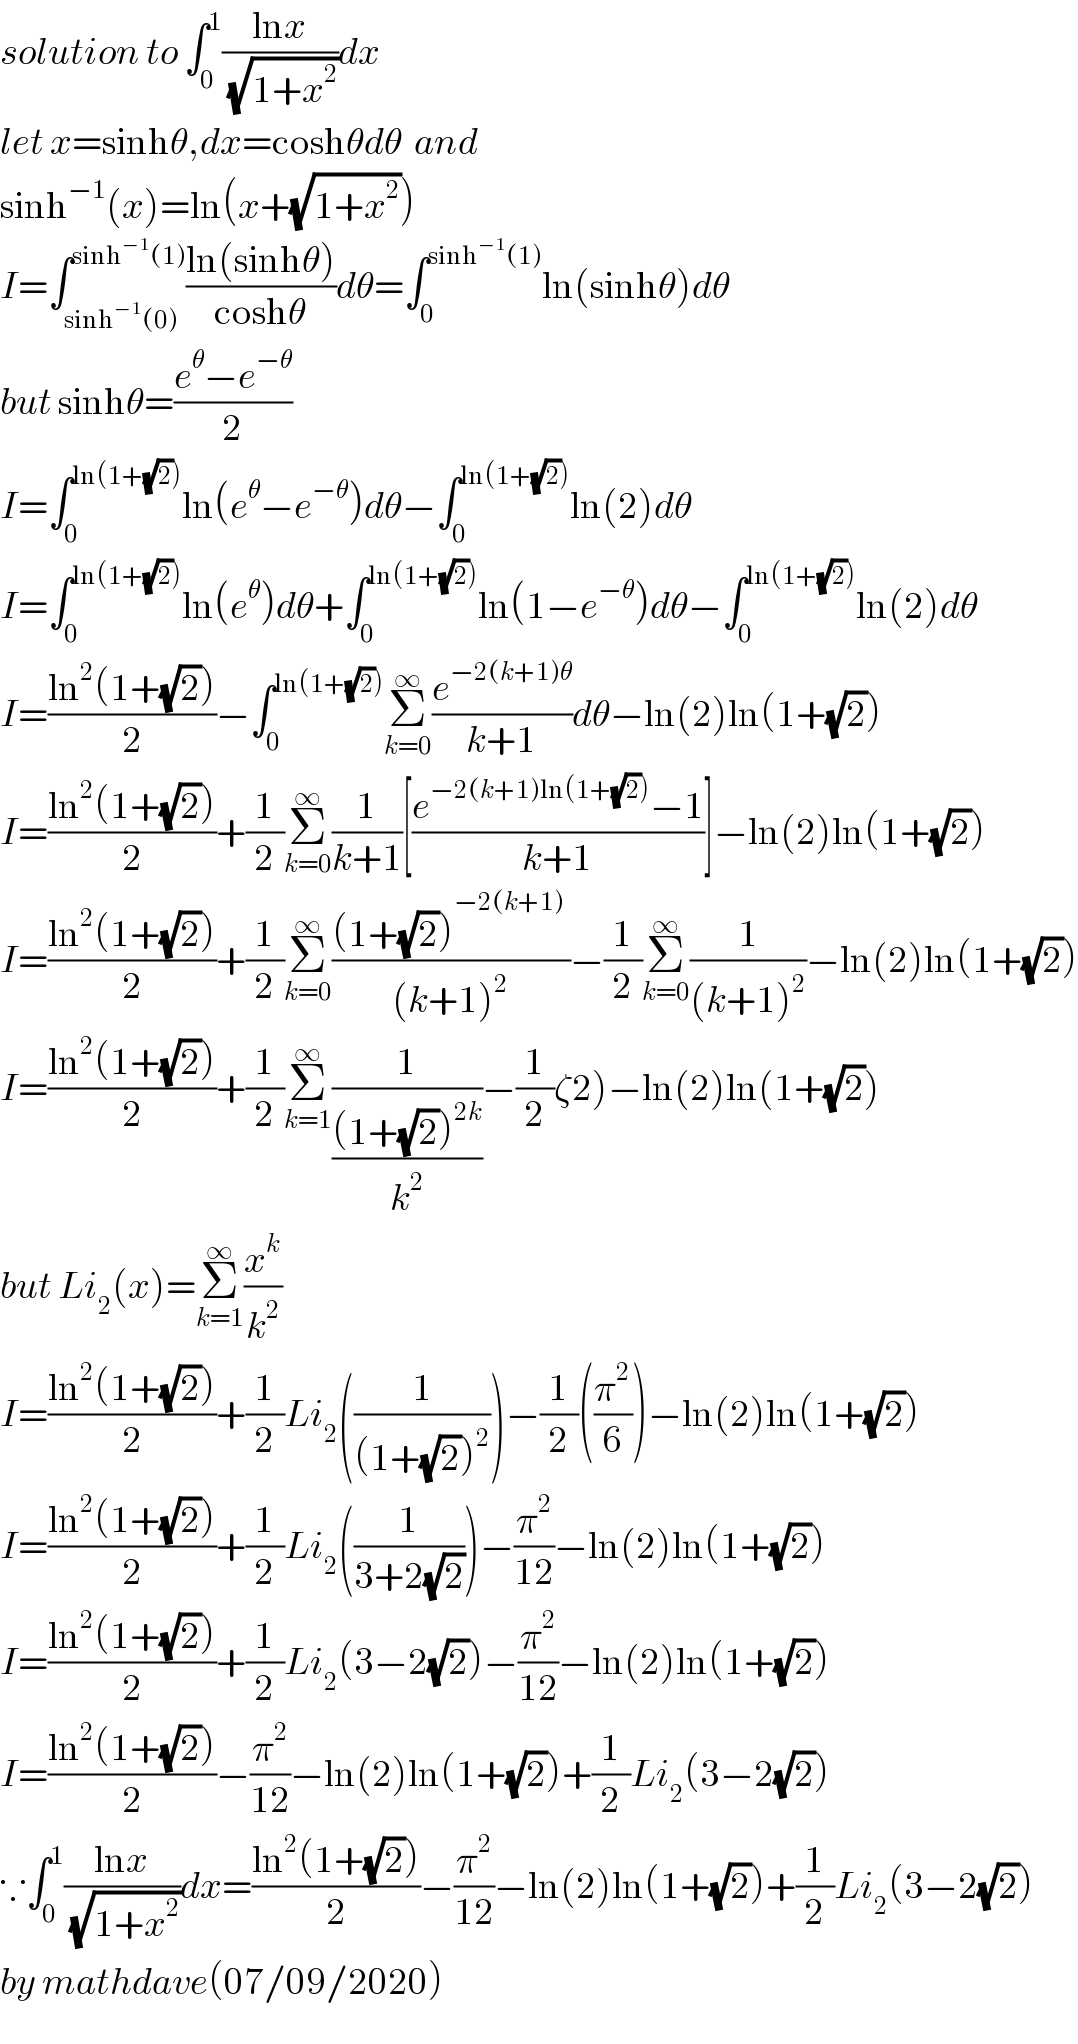 solution to ∫_0 ^1 ((lnx)/(√(1+x^2 )))dx  let x=sinhθ,dx=coshθdθ  and  sinh^(−1) (x)=ln(x+(√(1+x^2 )))  I=∫_(sinh^(−1) (0)) ^(sinh^(−1) (1)) ((ln(sinhθ))/(coshθ))dθ=∫_0 ^(sinh^(−1) (1)) ln(sinhθ)dθ  but sinhθ=((e^θ −e^(−θ) )/2)  I=∫_0 ^(ln(1+(√2))) ln(e^θ −e^(−θ) )dθ−∫_0 ^(ln(1+(√2))) ln(2)dθ  I=∫_0 ^(ln(1+(√2))) ln(e^θ )dθ+∫_0 ^(ln(1+(√2))) ln(1−e^(−θ) )dθ−∫_0 ^(ln(1+(√2))) ln(2)dθ  I=((ln^2 (1+(√2)))/2)−∫_0 ^(ln(1+(√2))) Σ_(k=0) ^∞ (e^(−2(k+1)θ) /(k+1))dθ−ln(2)ln(1+(√2))  I=((ln^2 (1+(√2)))/2)+(1/2)Σ_(k=0) ^∞ (1/(k+1))[((e^(−2(k+1)ln(1+(√2))) −1)/(k+1))]−ln(2)ln(1+(√2))  I=((ln^2 (1+(√2)))/2)+(1/2)Σ_(k=0) ^∞ (((1+(√2))^(−2(k+1)_ ) )/((k+1)^2 ))−(1/2)Σ_(k=0) ^∞ (1/((k+1)^2 ))−ln(2)ln(1+(√2))  I=((ln^2 (1+(√2)))/2)+(1/2)Σ_(k=1) ^∞ (1/(((1+(√2))^(2k) )/k^2 ))−(1/2)ζ2)−ln(2)ln(1+(√2))  but Li_2 (x)=Σ_(k=1) ^∞ (x^k /k^2 )  I=((ln^2 (1+(√2)))/2)+(1/2)Li_2 ((1/((1+(√2))^2 )))−(1/2)((π^2 /6))−ln(2)ln(1+(√2))  I=((ln^2 (1+(√2)))/2)+(1/2)Li_2 ((1/(3+2(√2))))−(π^2 /(12))−ln(2)ln(1+(√2))  I=((ln^2 (1+(√2)))/2)+(1/2)Li_2 (3−2(√2))−(π^2 /(12))−ln(2)ln(1+(√2))  I=((ln^2 (1+(√2)))/2)−(π^2 /(12))−ln(2)ln(1+(√2))+(1/2)Li_2 (3−2(√2))  ∵∫_0 ^1 ((lnx)/(√(1+x^2 )))dx=((ln^2 (1+(√2)))/2)−(π^2 /(12))−ln(2)ln(1+(√2))+(1/2)Li_2 (3−2(√2))  by mathdave(07/09/2020)  